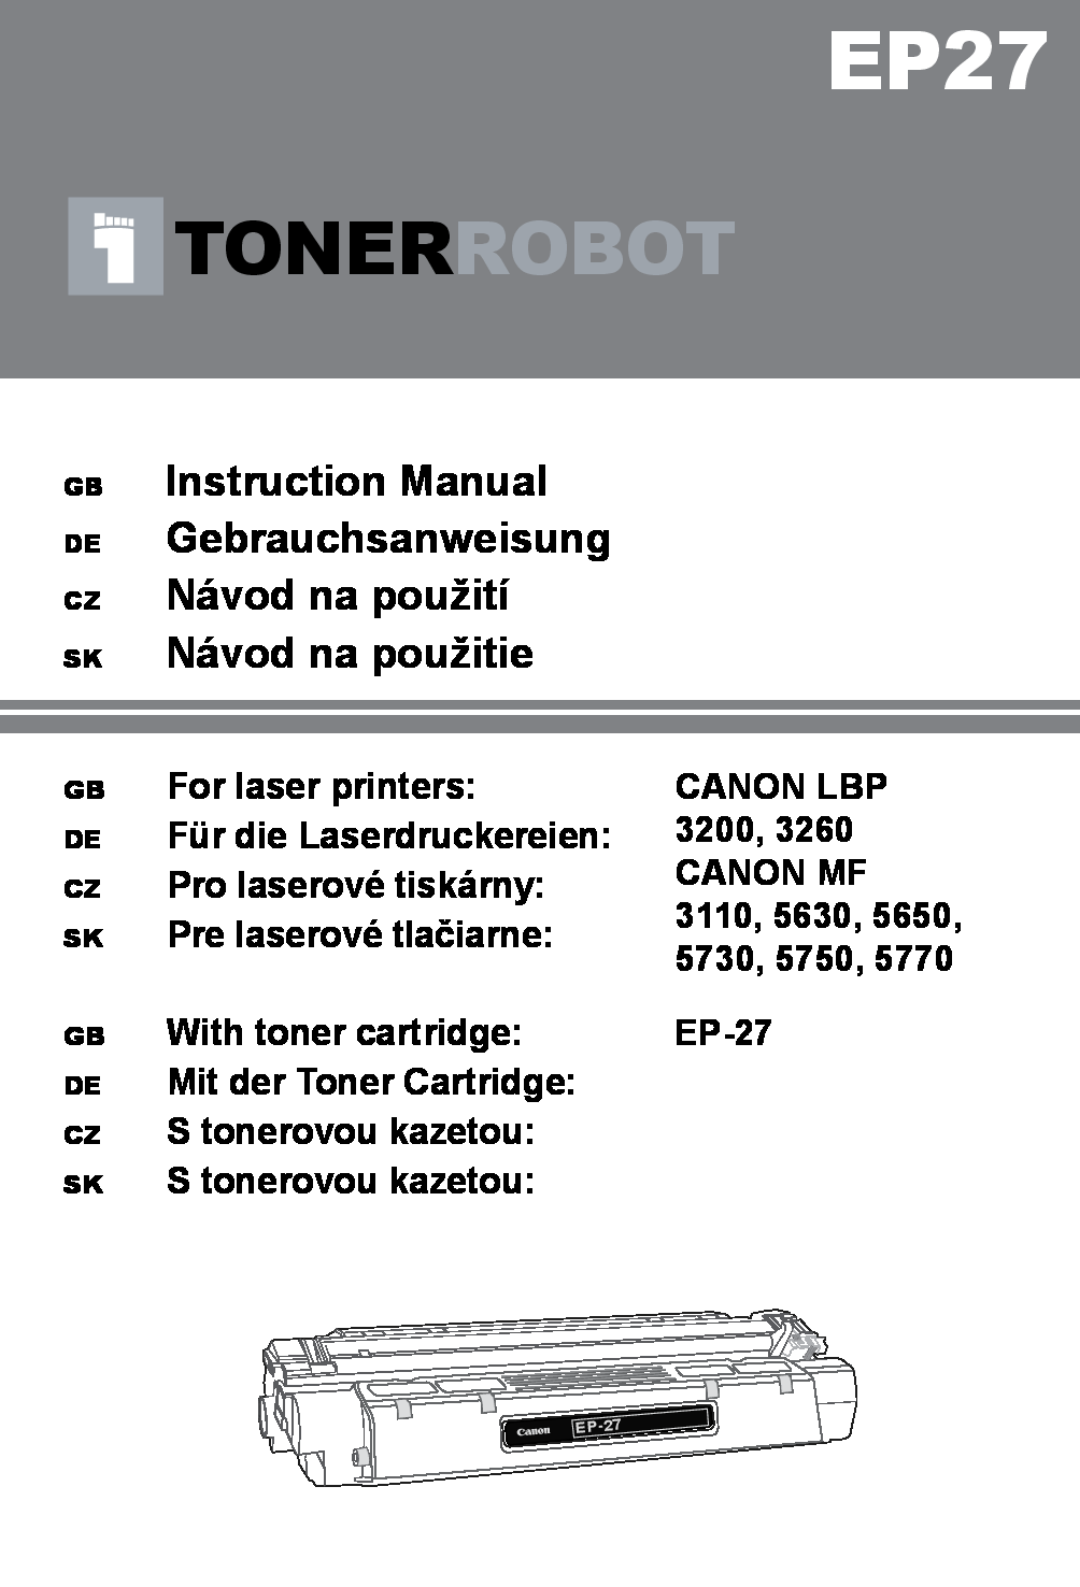 Canon EP27 instruction manual Tonerrobot, GB Instruction Manual DE Gebrauchsanweisung CZ Návod na použití 